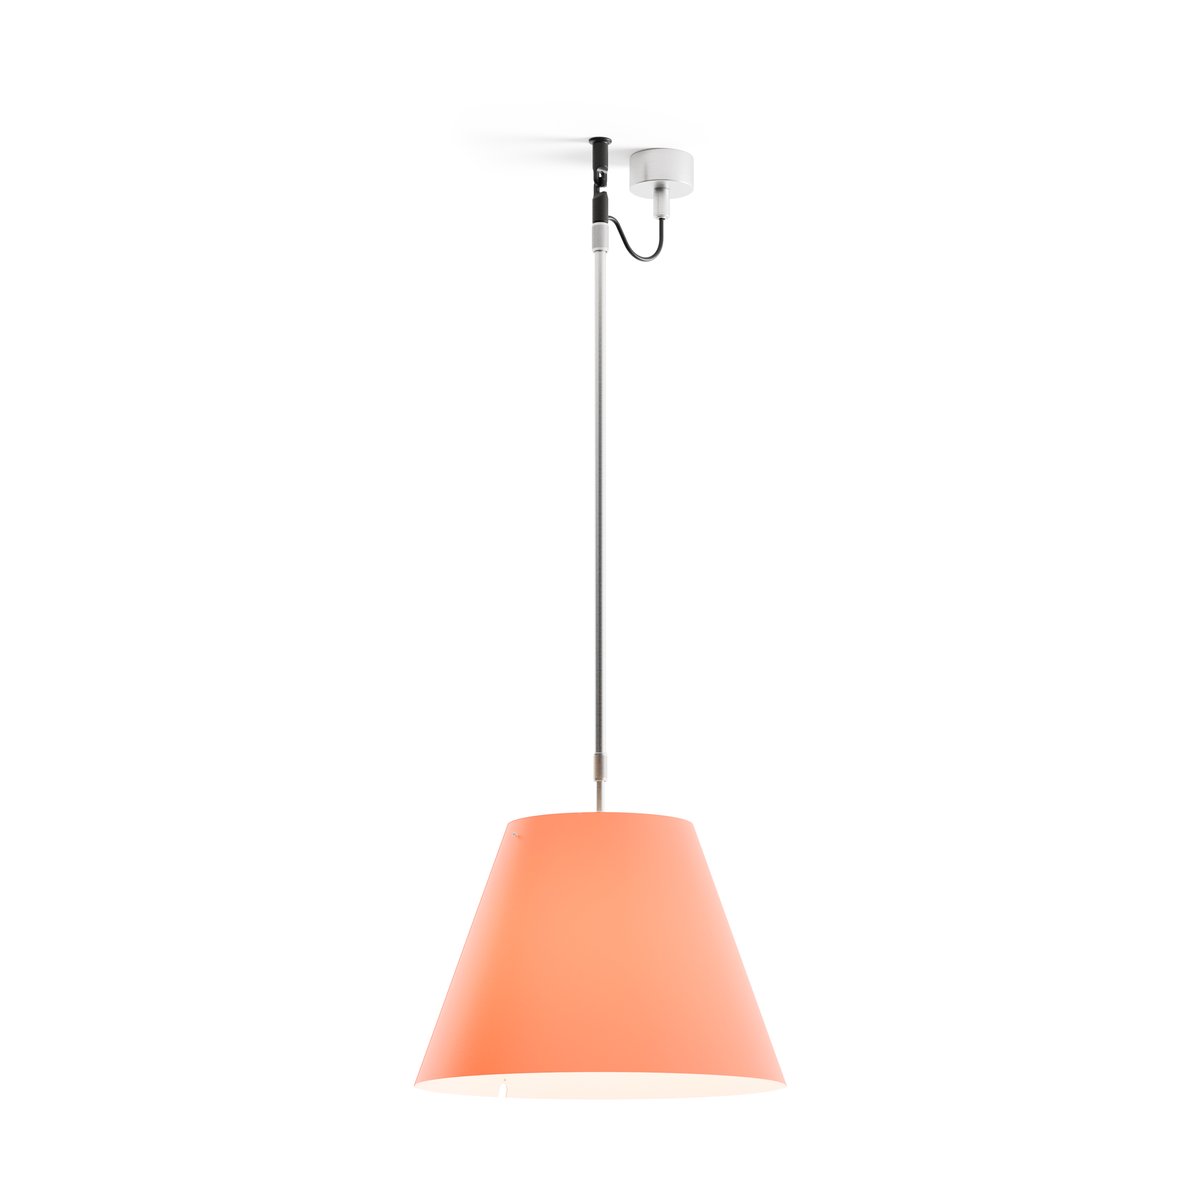 Luceplan Costanza D13 s hanglamp edgy pink